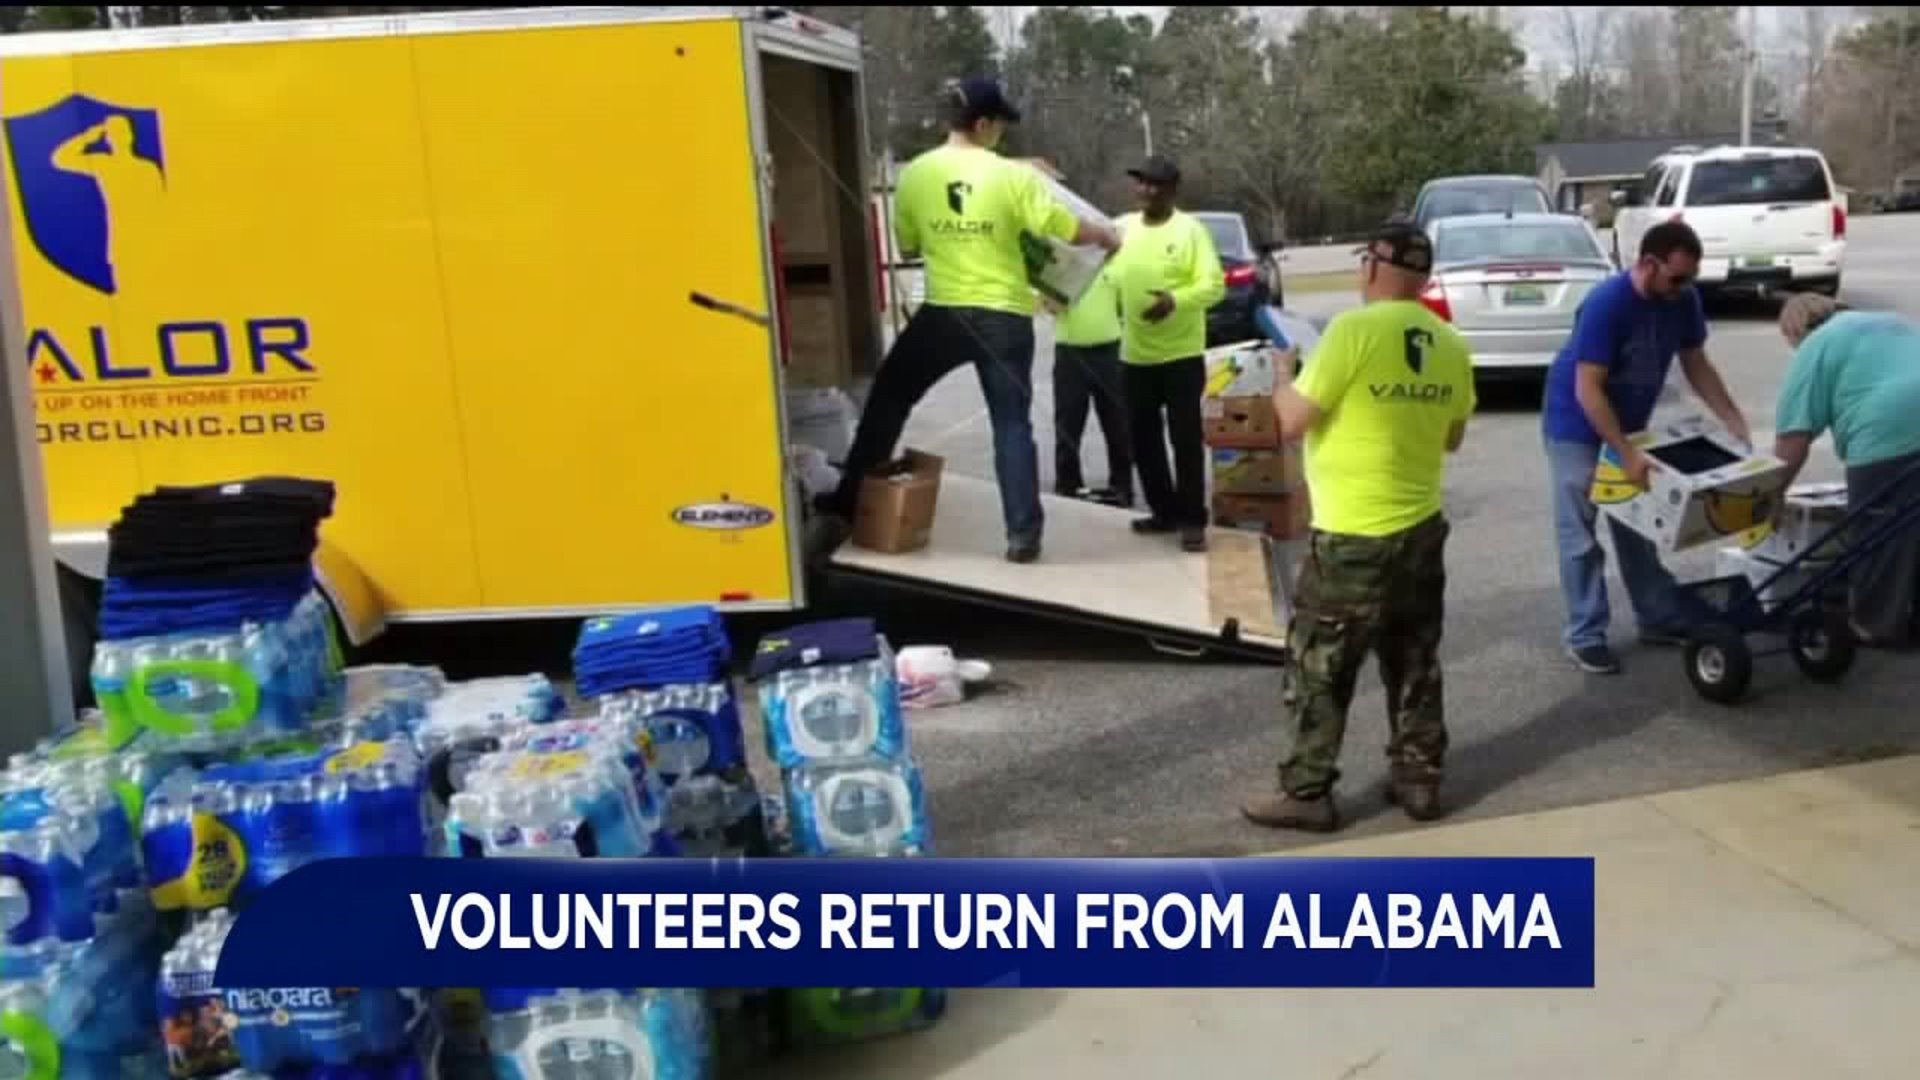 Volunteers from Veterans Organization Return from Alabama